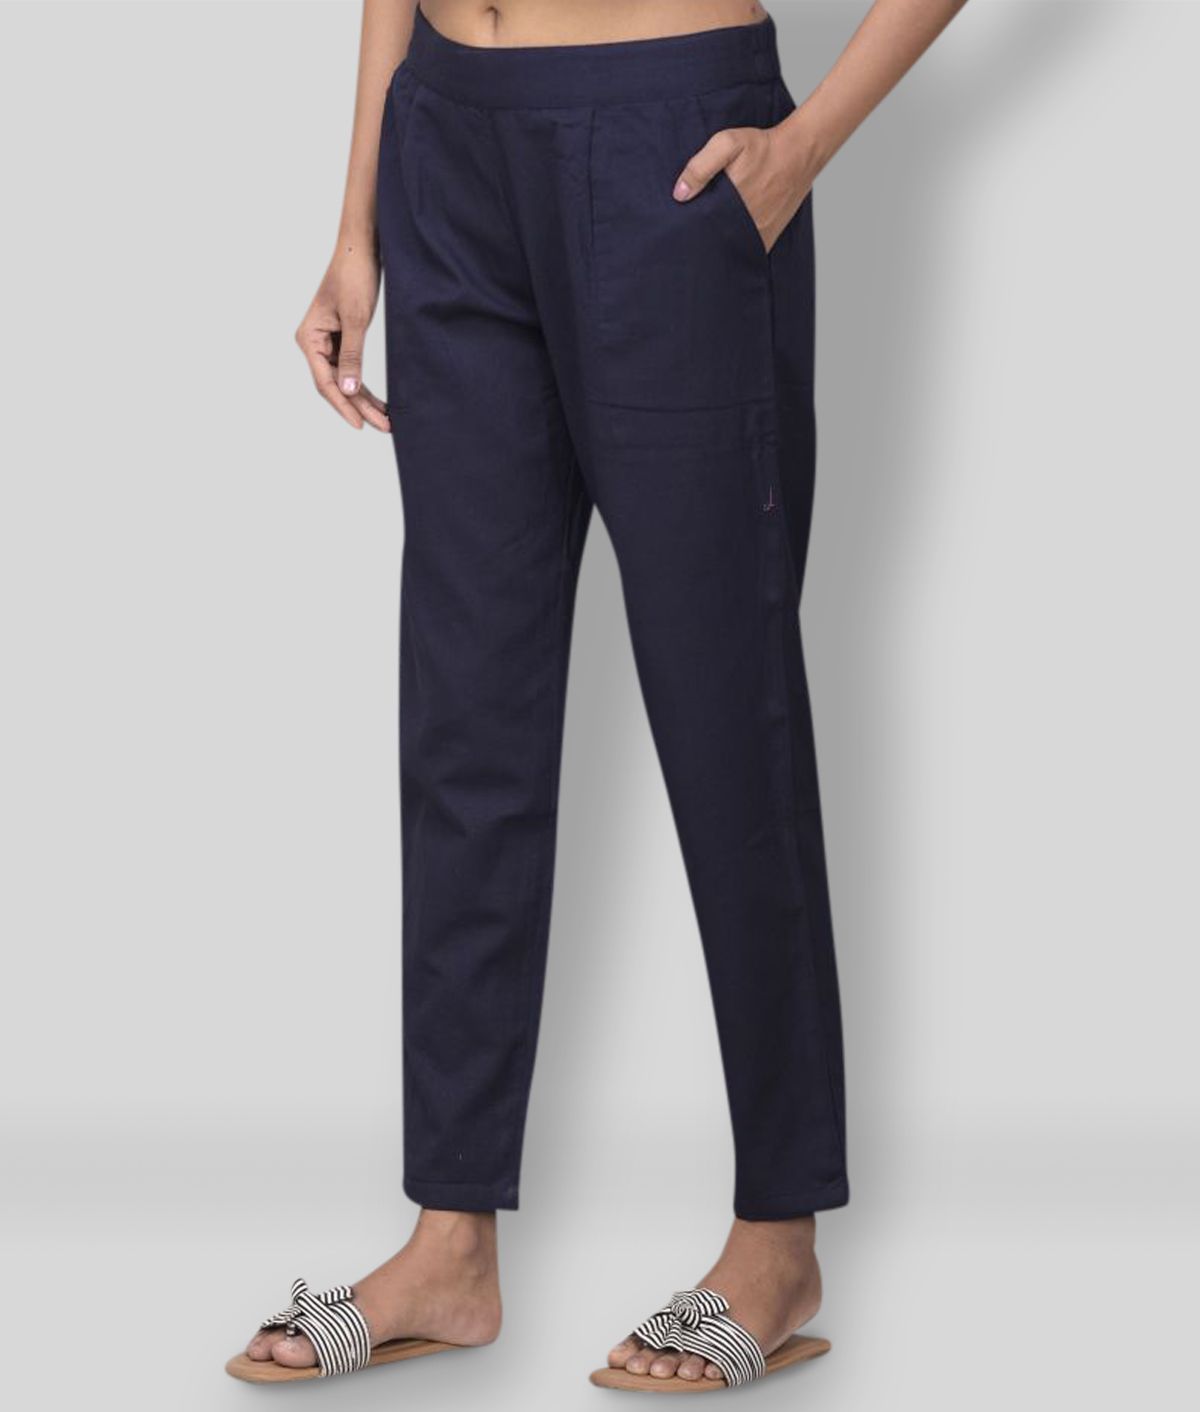 Alexa eva - Navy Blue Cotton Straight Fit Women's Cigarette Pants  ( Pack of 1 )